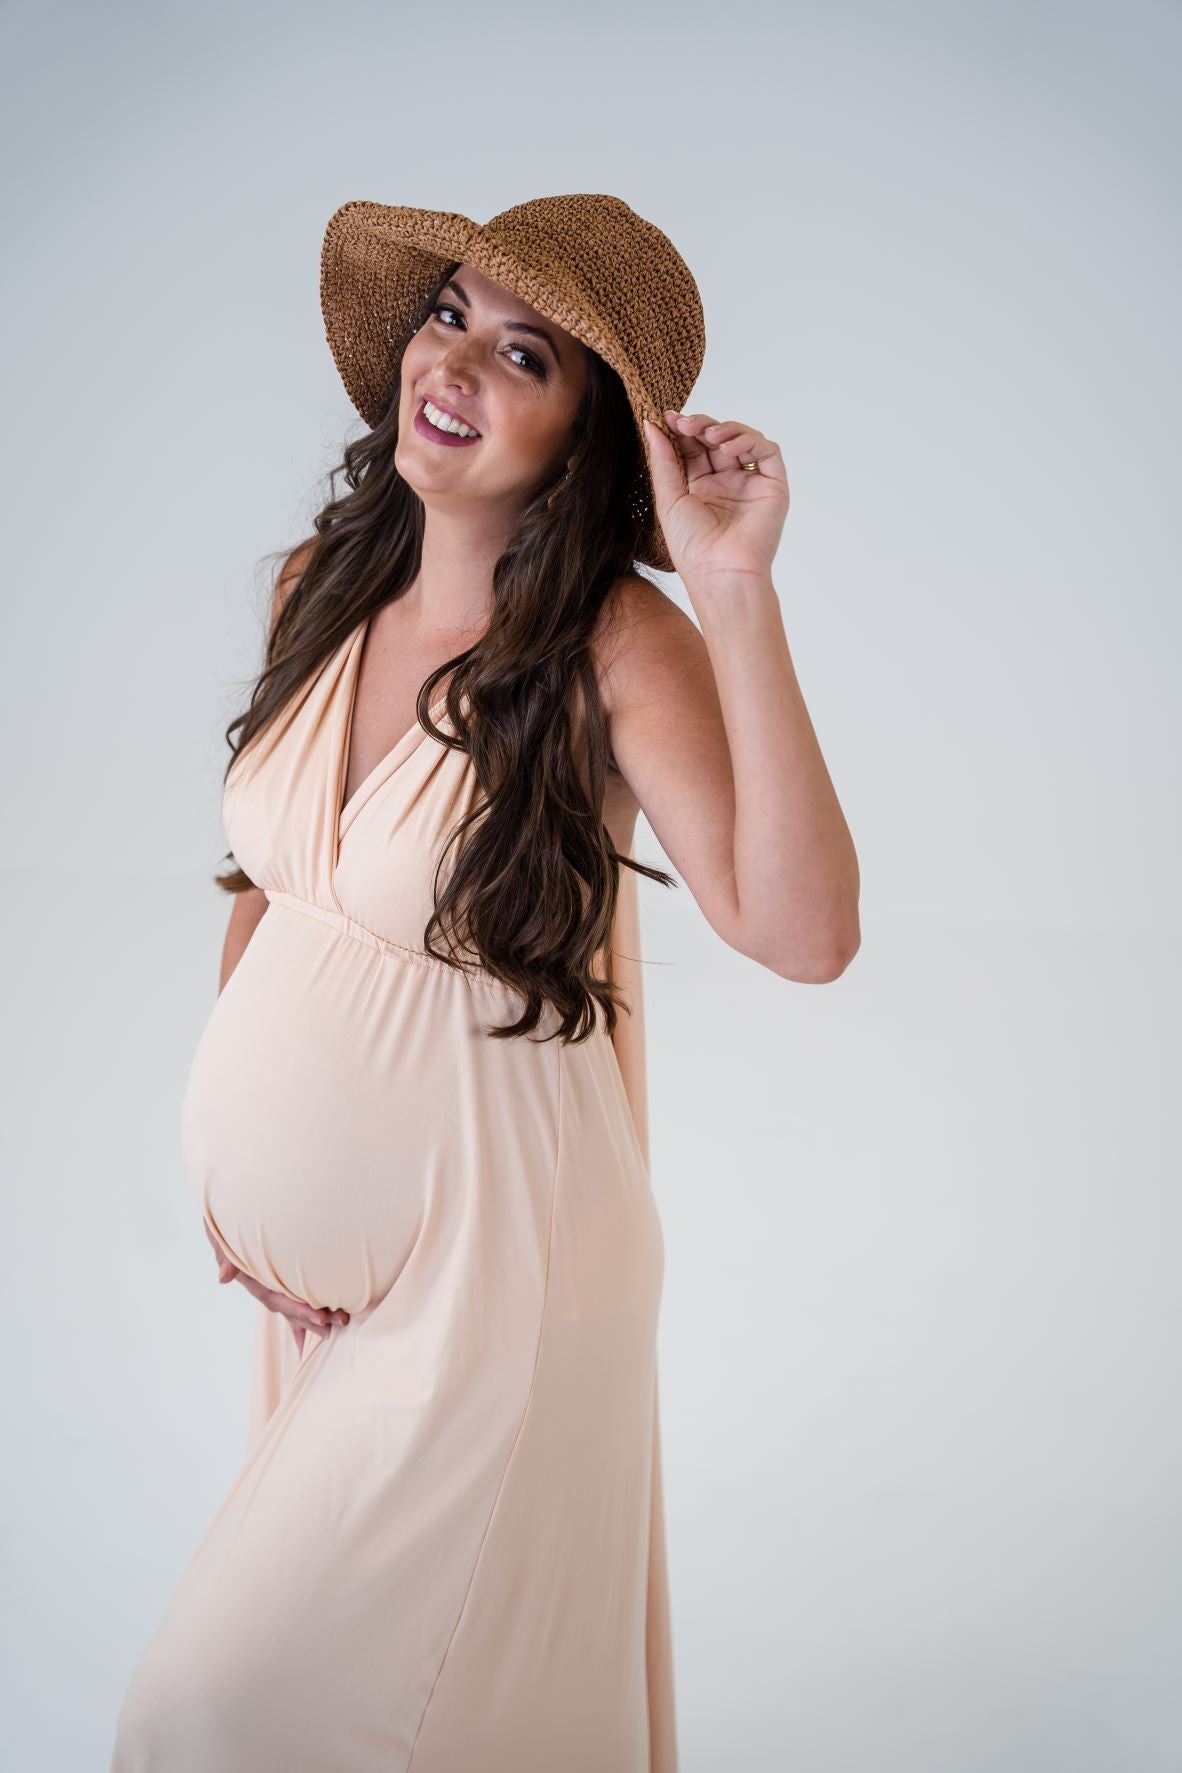 Maternity Photoshoot Dresses - Flexy - Cream Dress - 4 DAY RENTAL - Luxe Bumps AU